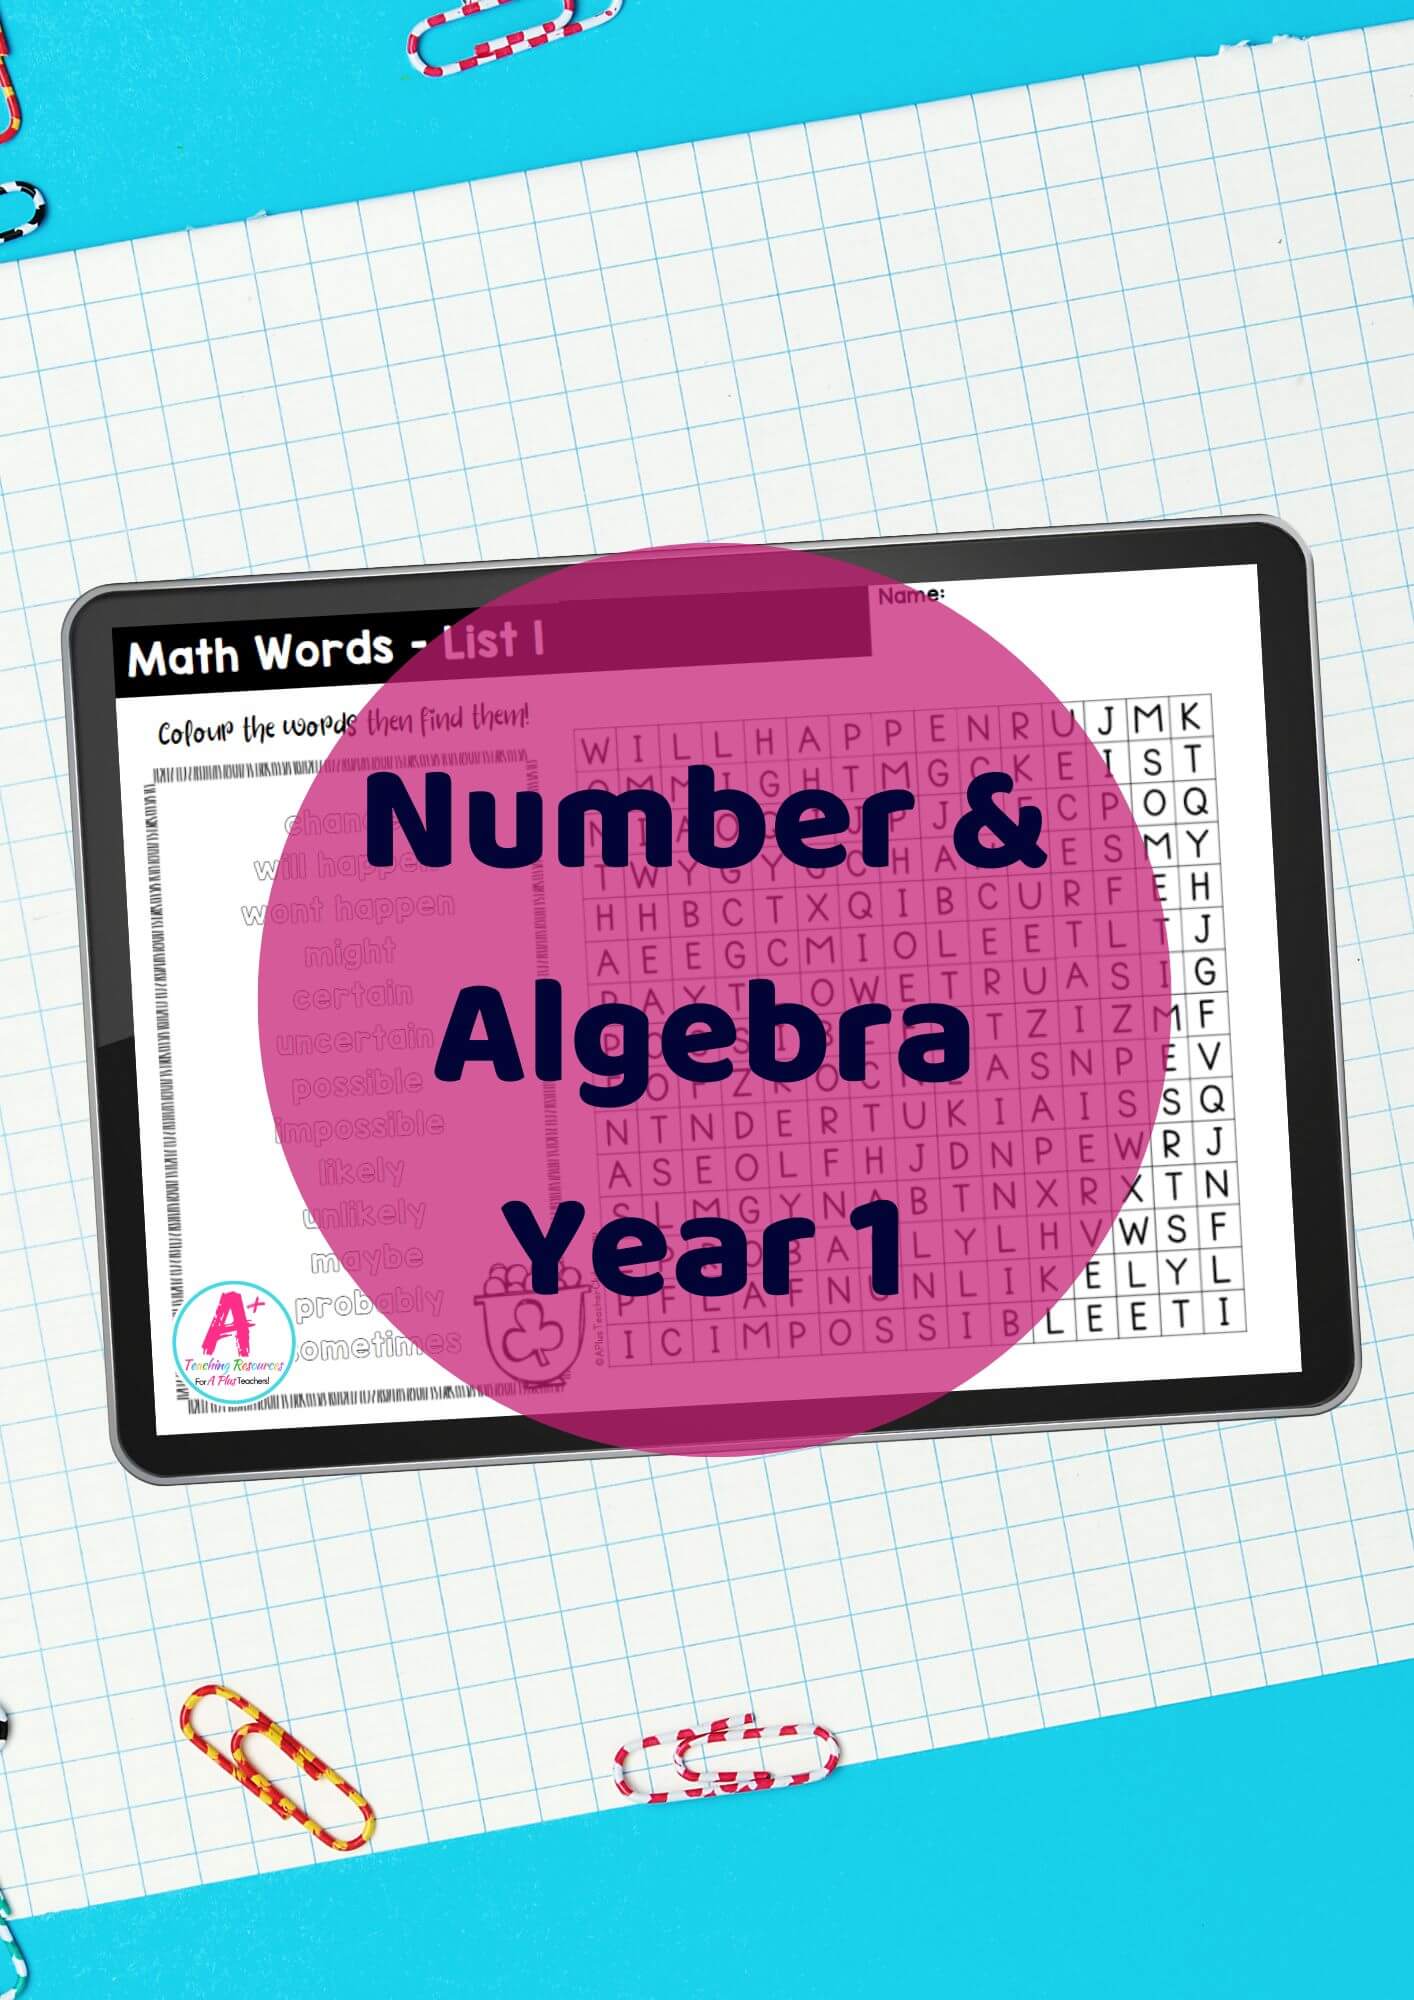 Number & Algebra Vocabulary POWERPOINT - Year 1